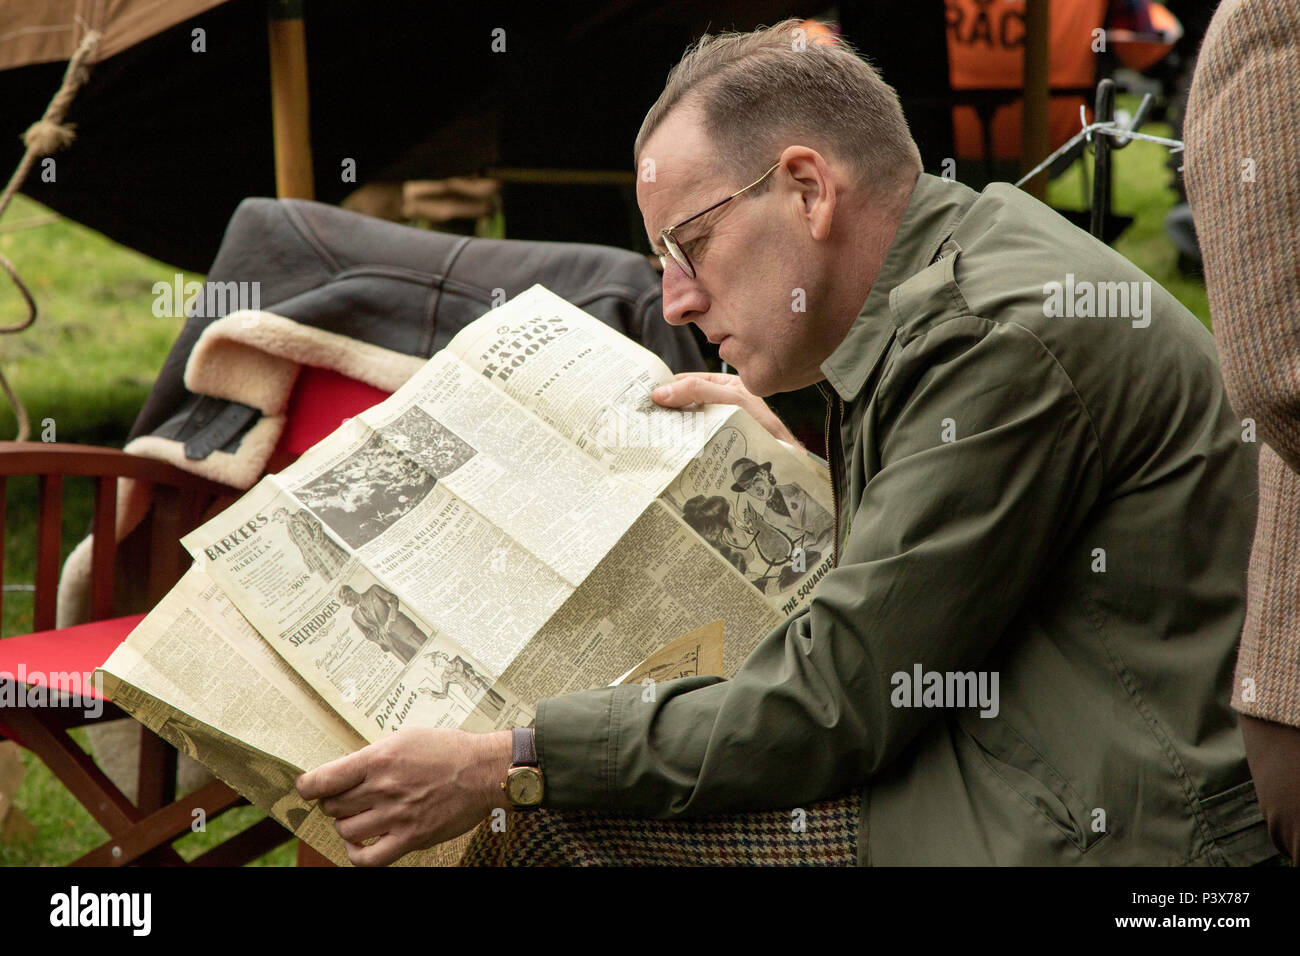 Homme lisant un vieux journal au Valley Gardens 1940 Day, Harrogate, North Yorkshire, Angleterre, Royaume-Uni. Banque D'Images